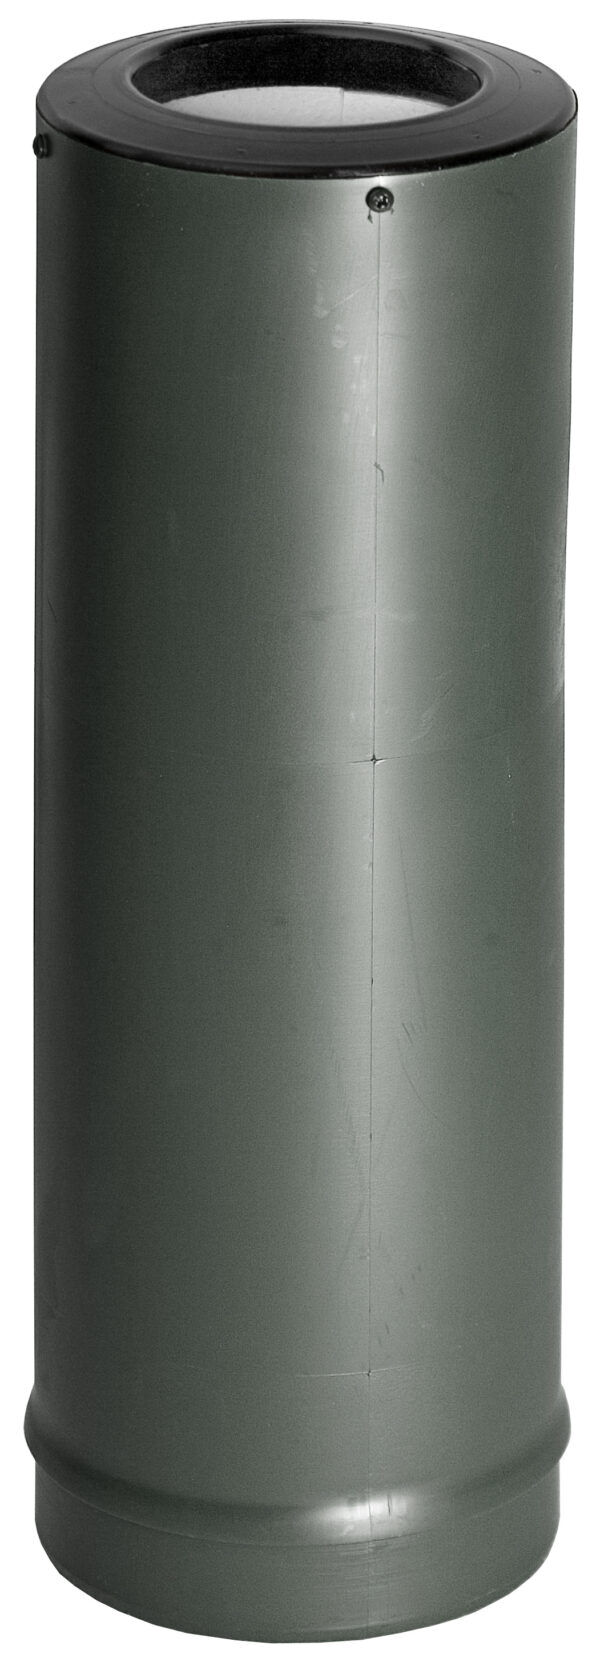 Изолирующий кожух -110 Vilpe для теплоизоляции вентиляционного выхода Ø 110 мм 3